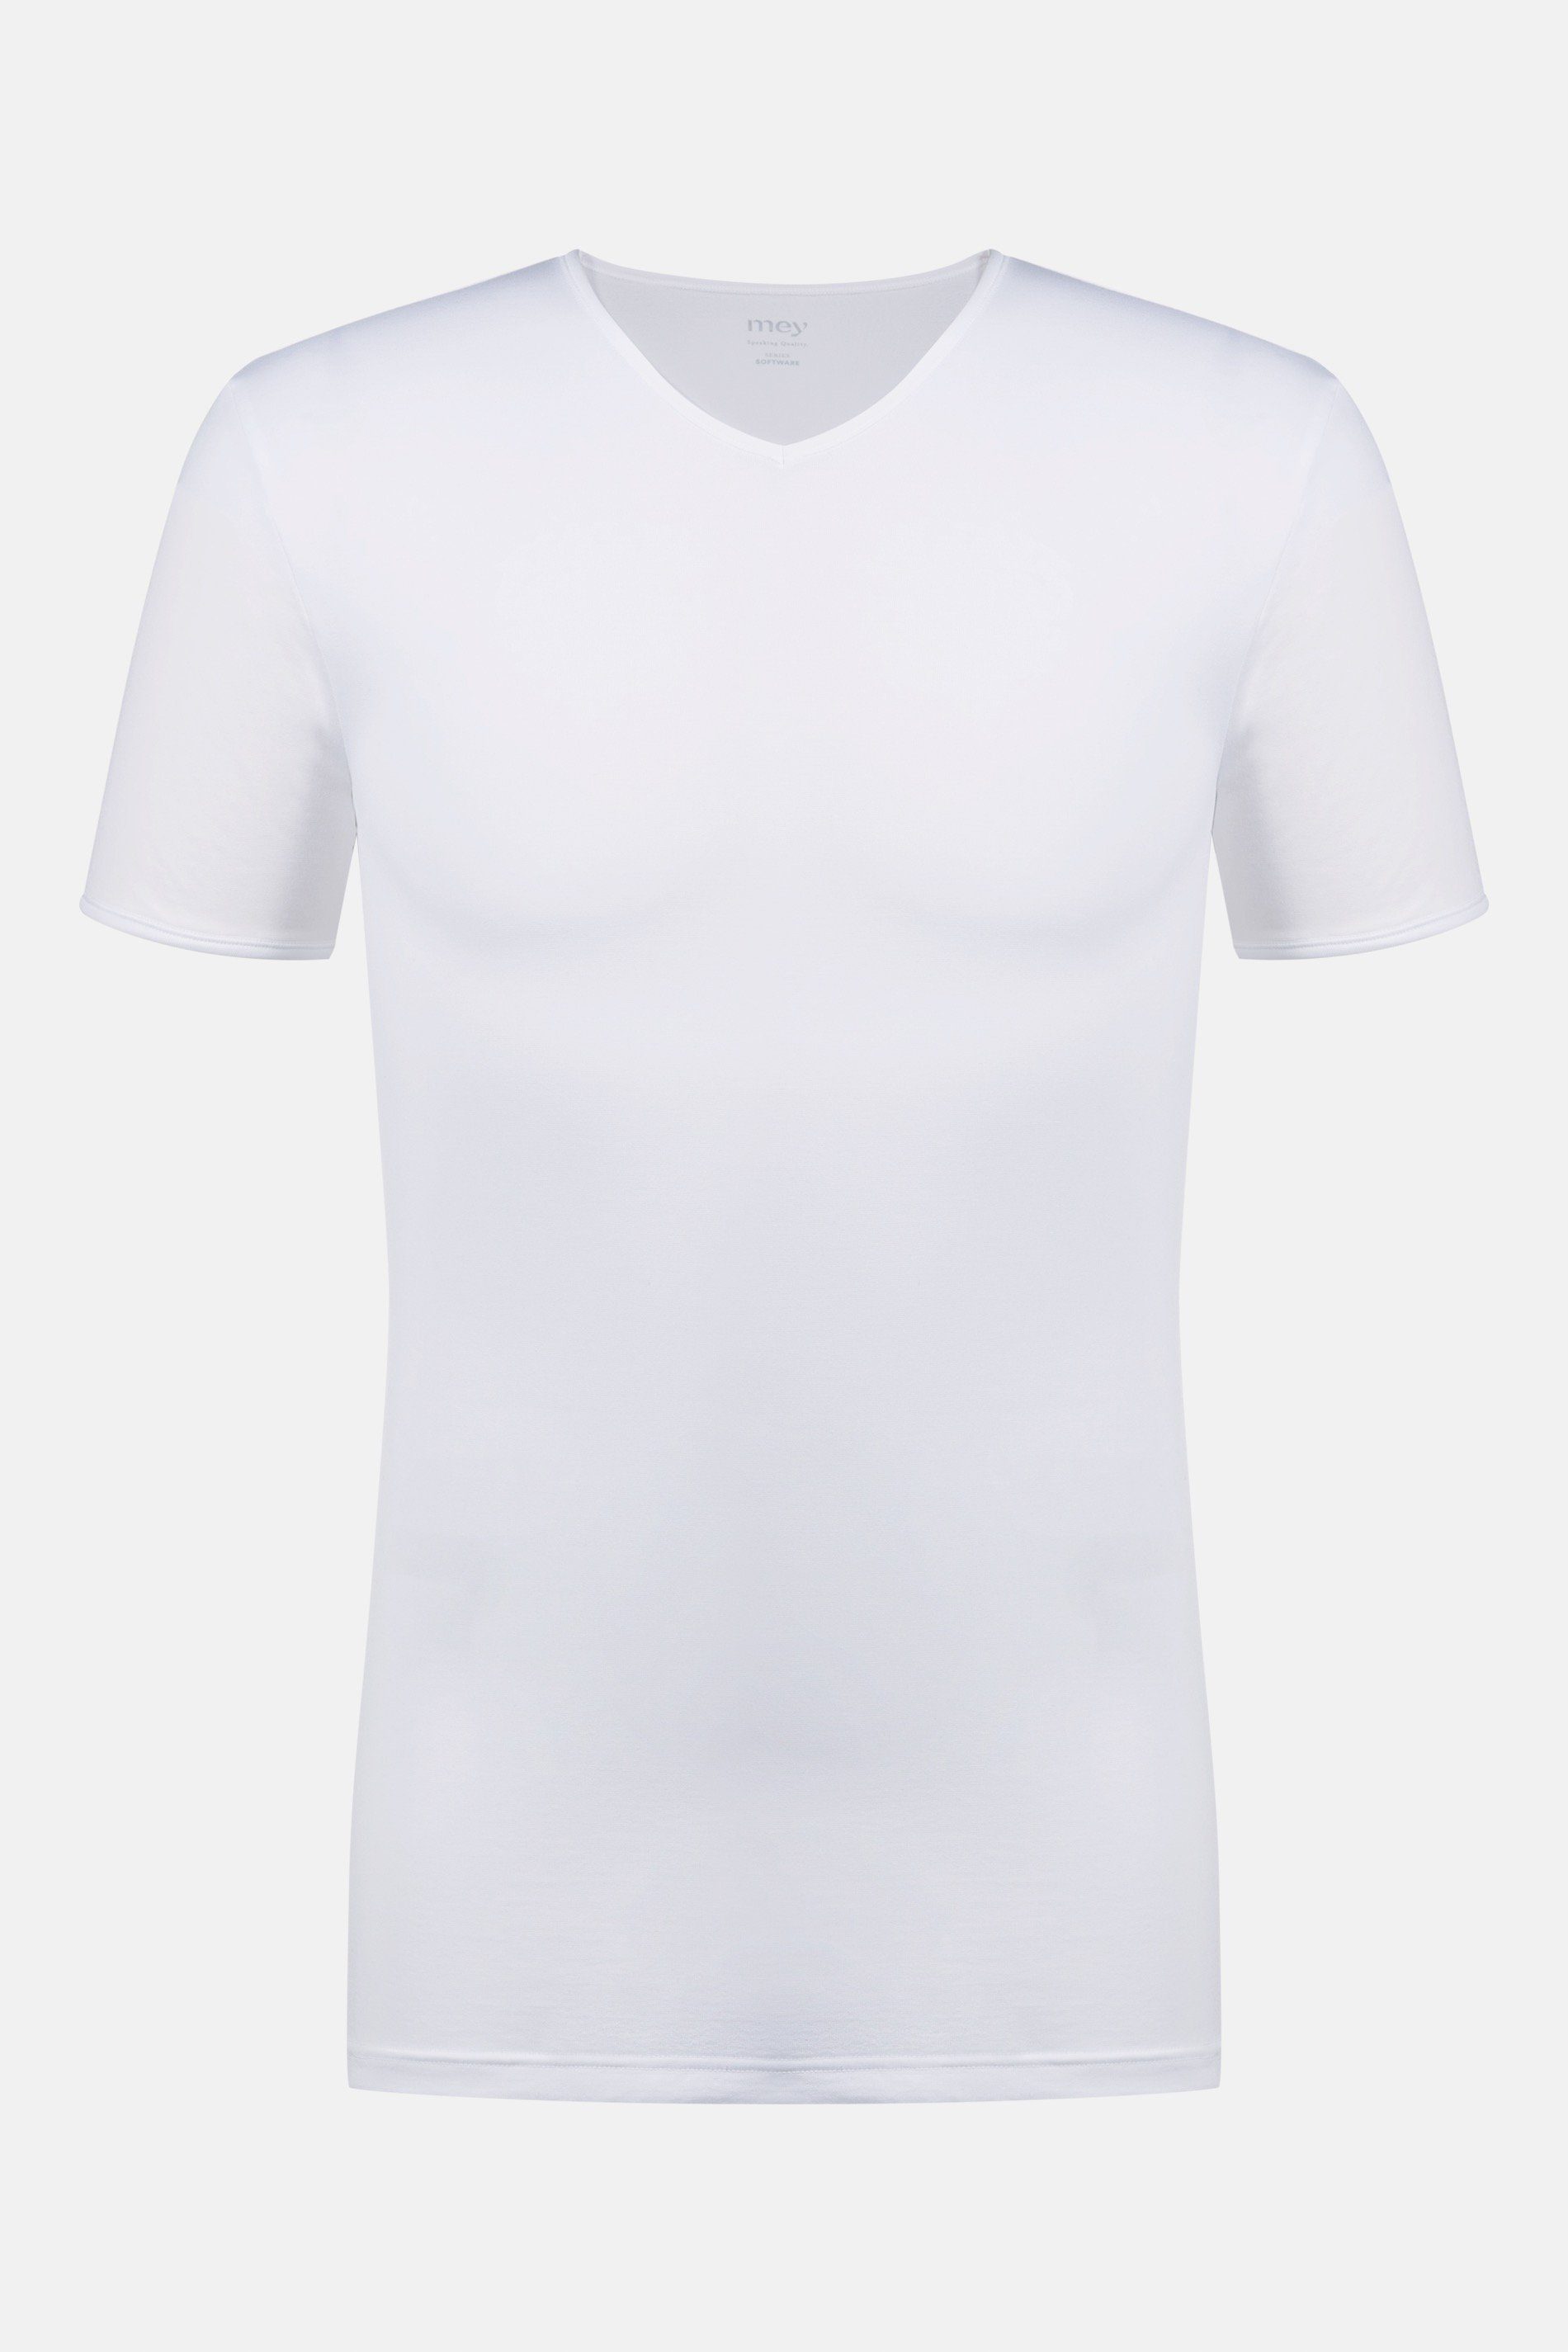 (1-tlg) Mey Serie Software s.Oliver Uni Weiss V-Shirt